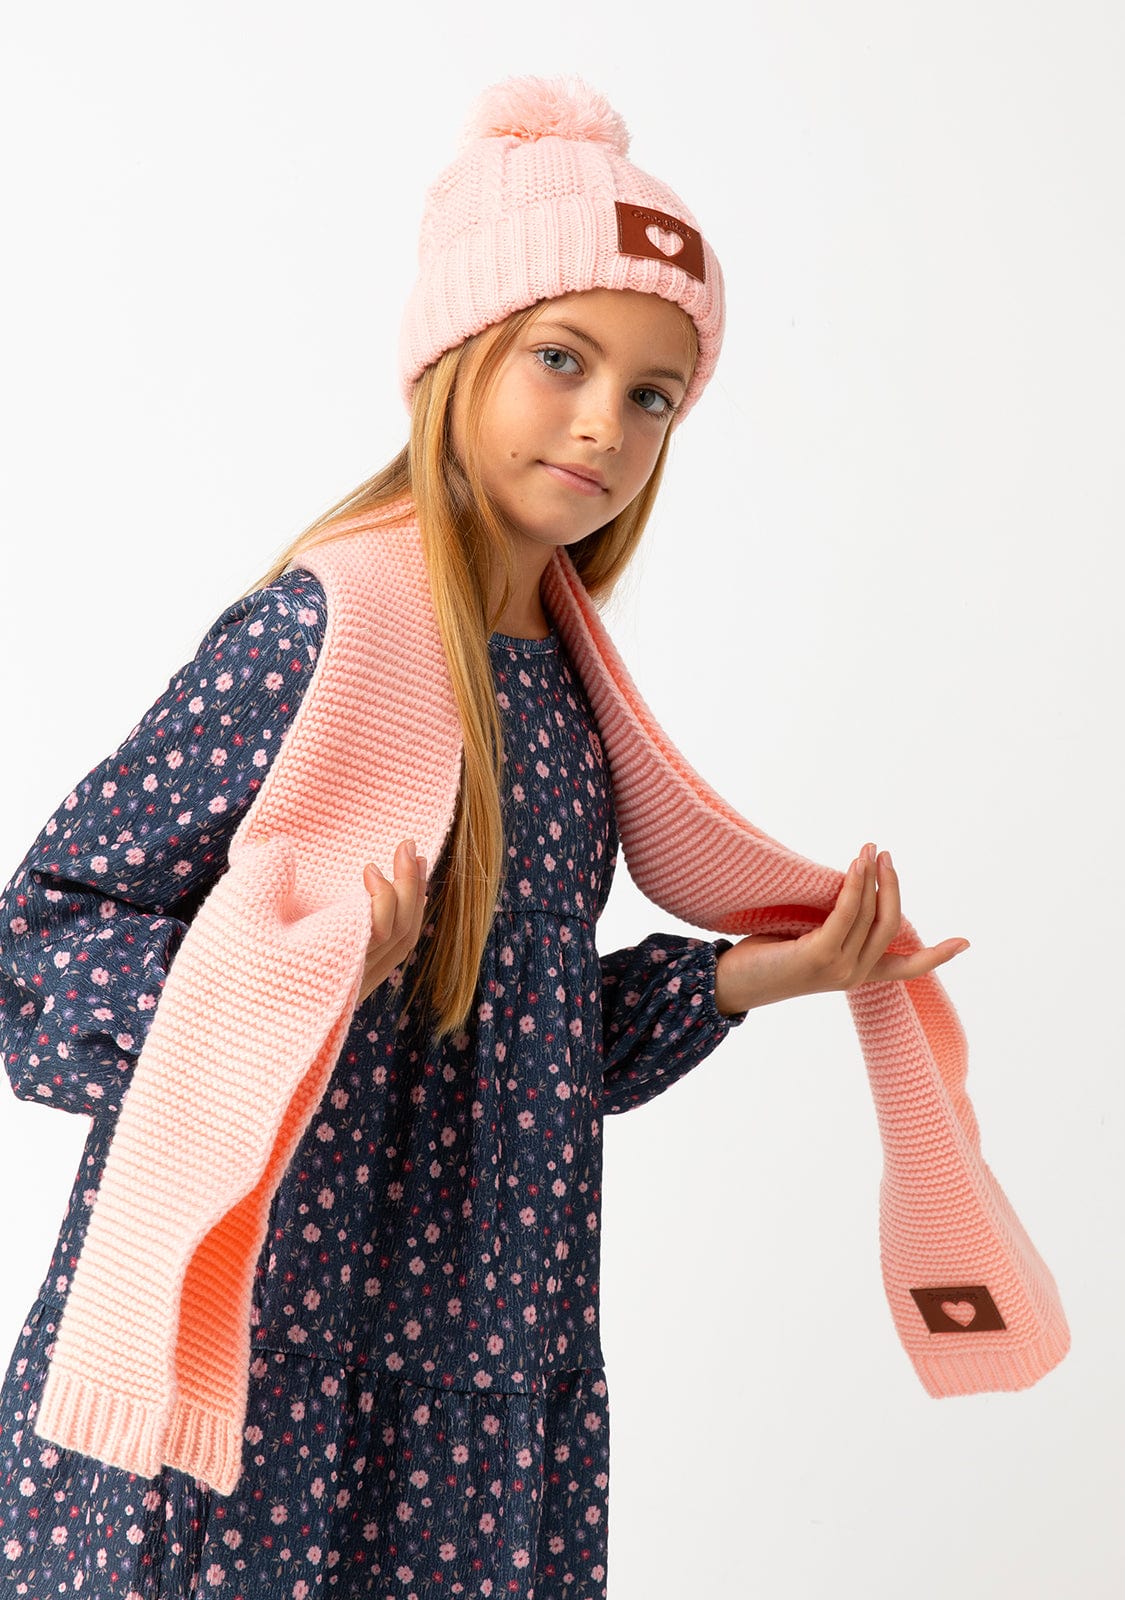 CONGUITOS TEXTIL Accessories Girl's Pink Pompon Beanie